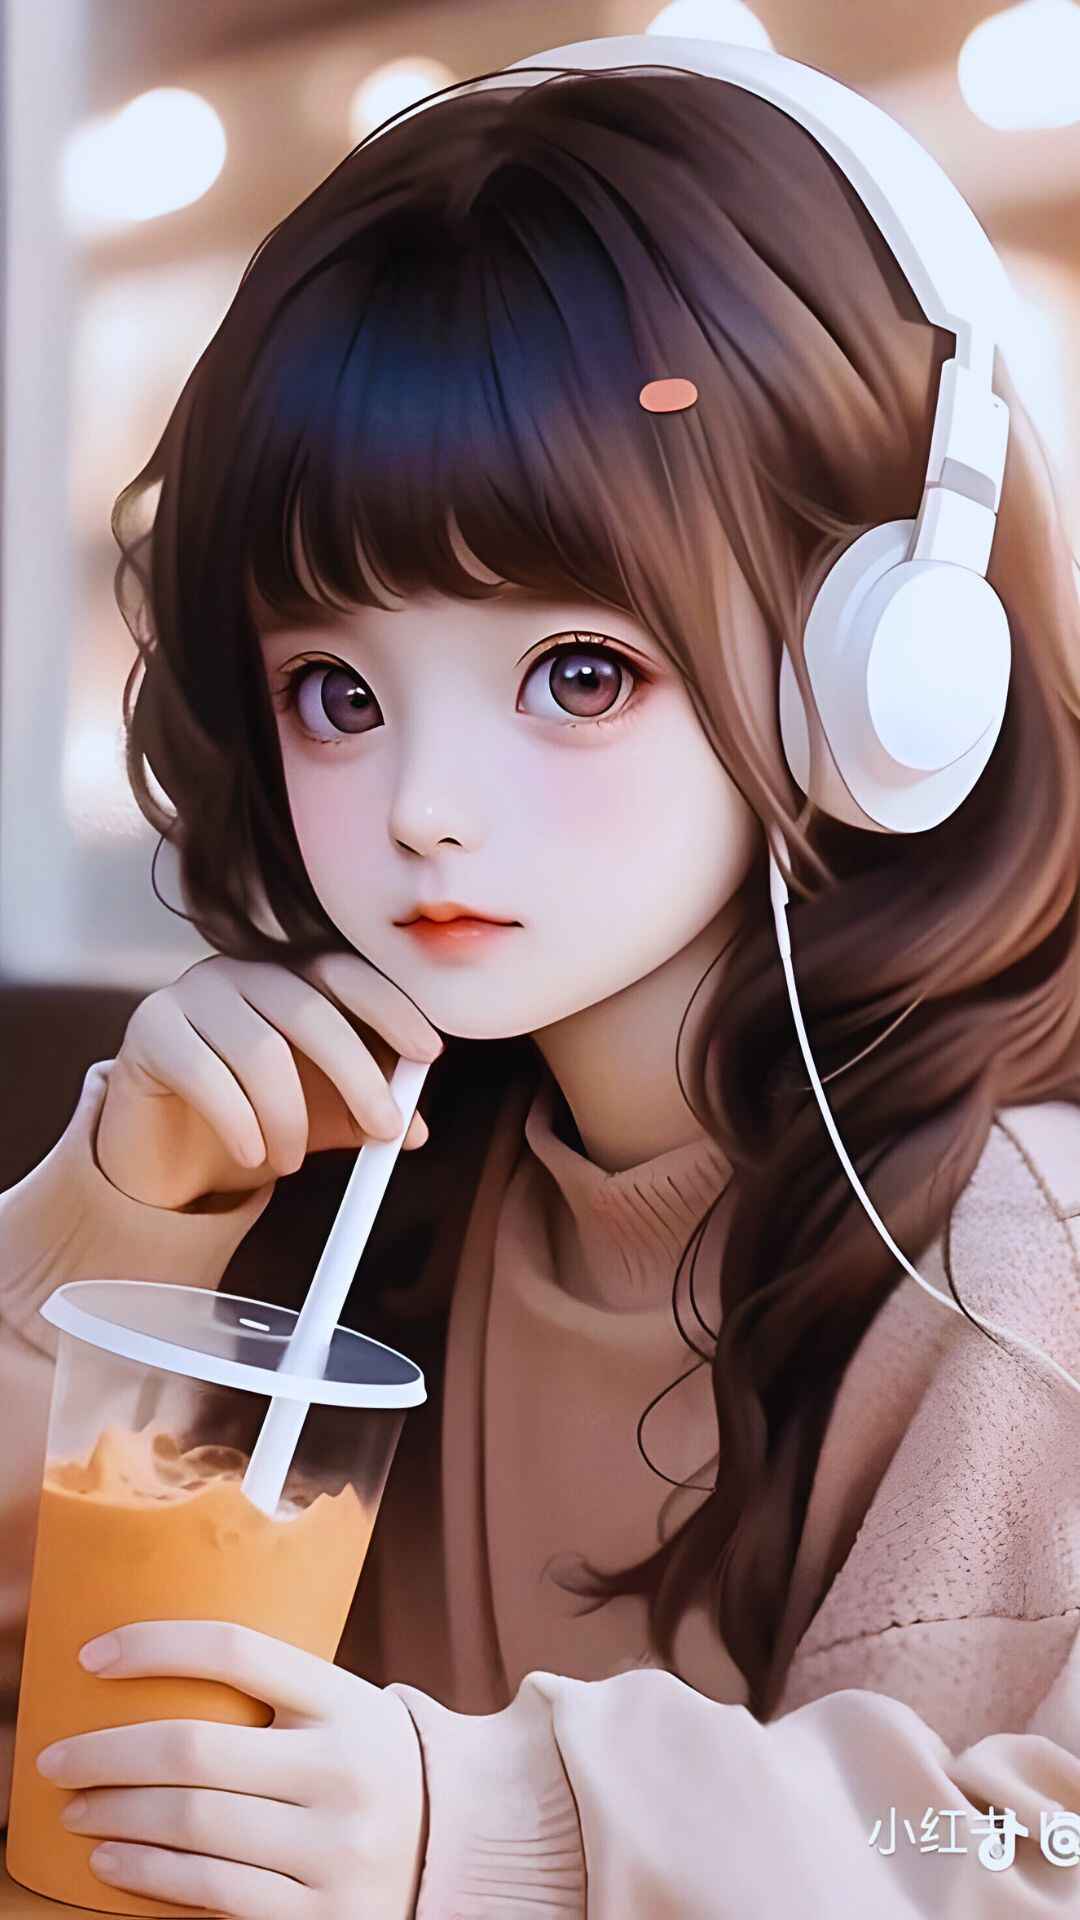 Cute Anime Girl With Headphones Wallpaper